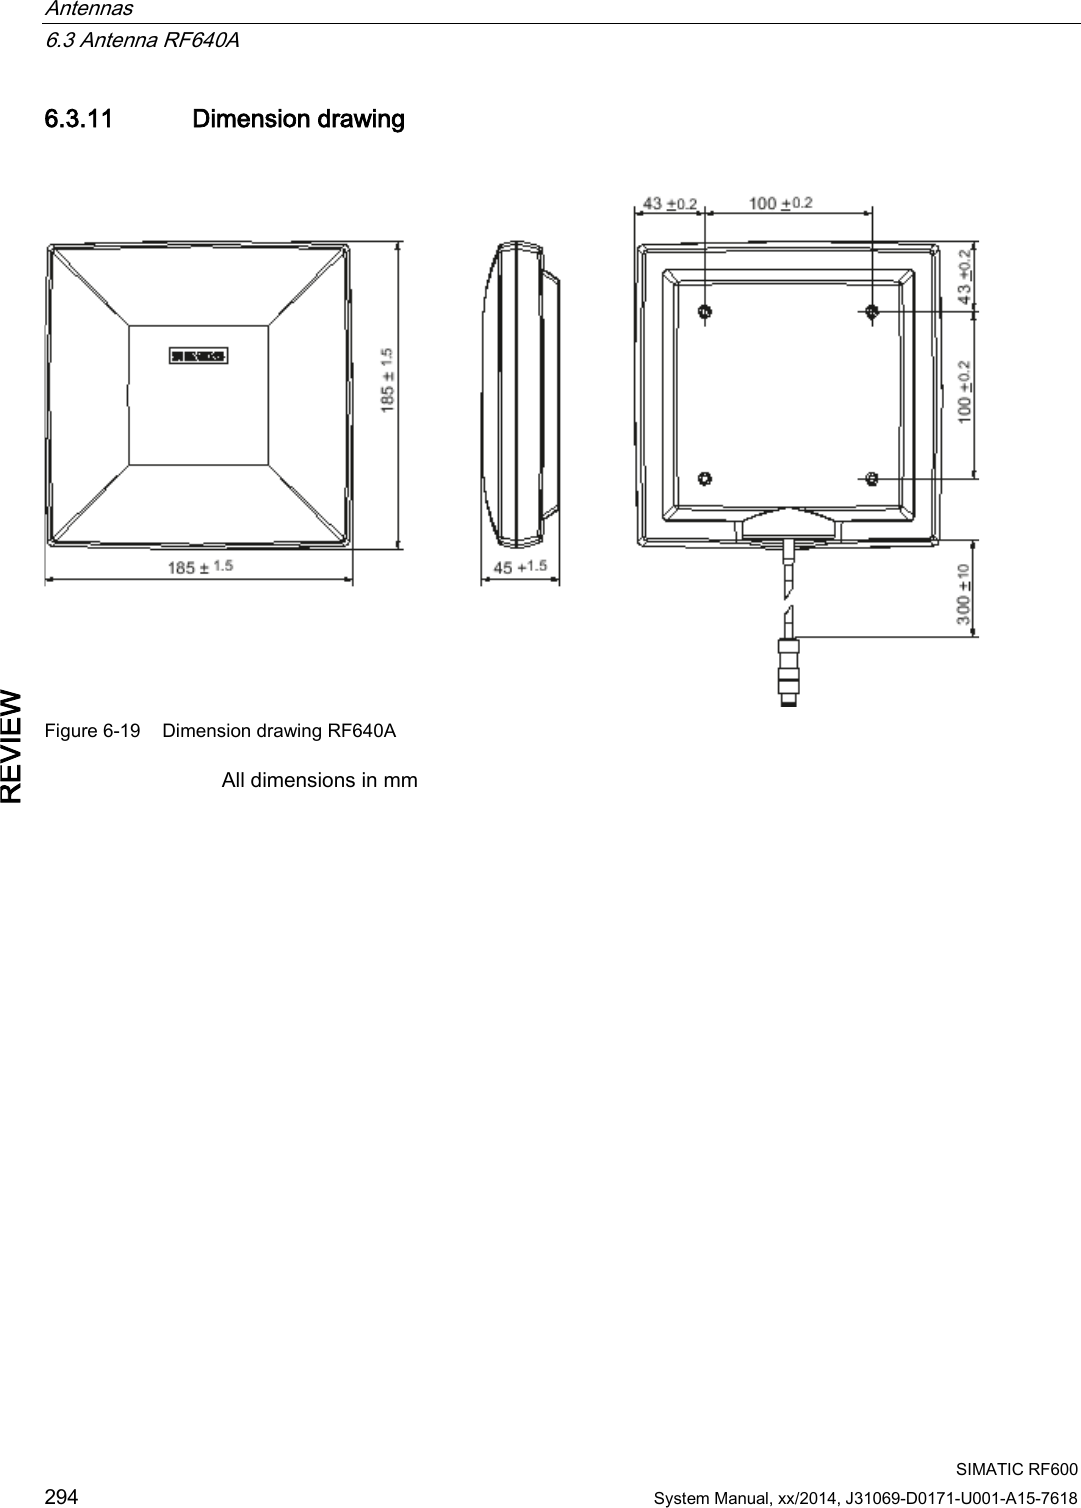 Antennas   6.3 Antenna RF640A  SIMATIC RF600 294 System Manual, xx/2014, J31069-D0171-U001-A15-7618 REVIEW 6.3.11 Dimension drawing  Figure 6-19 Dimension drawing RF640A All dimensions in mm 